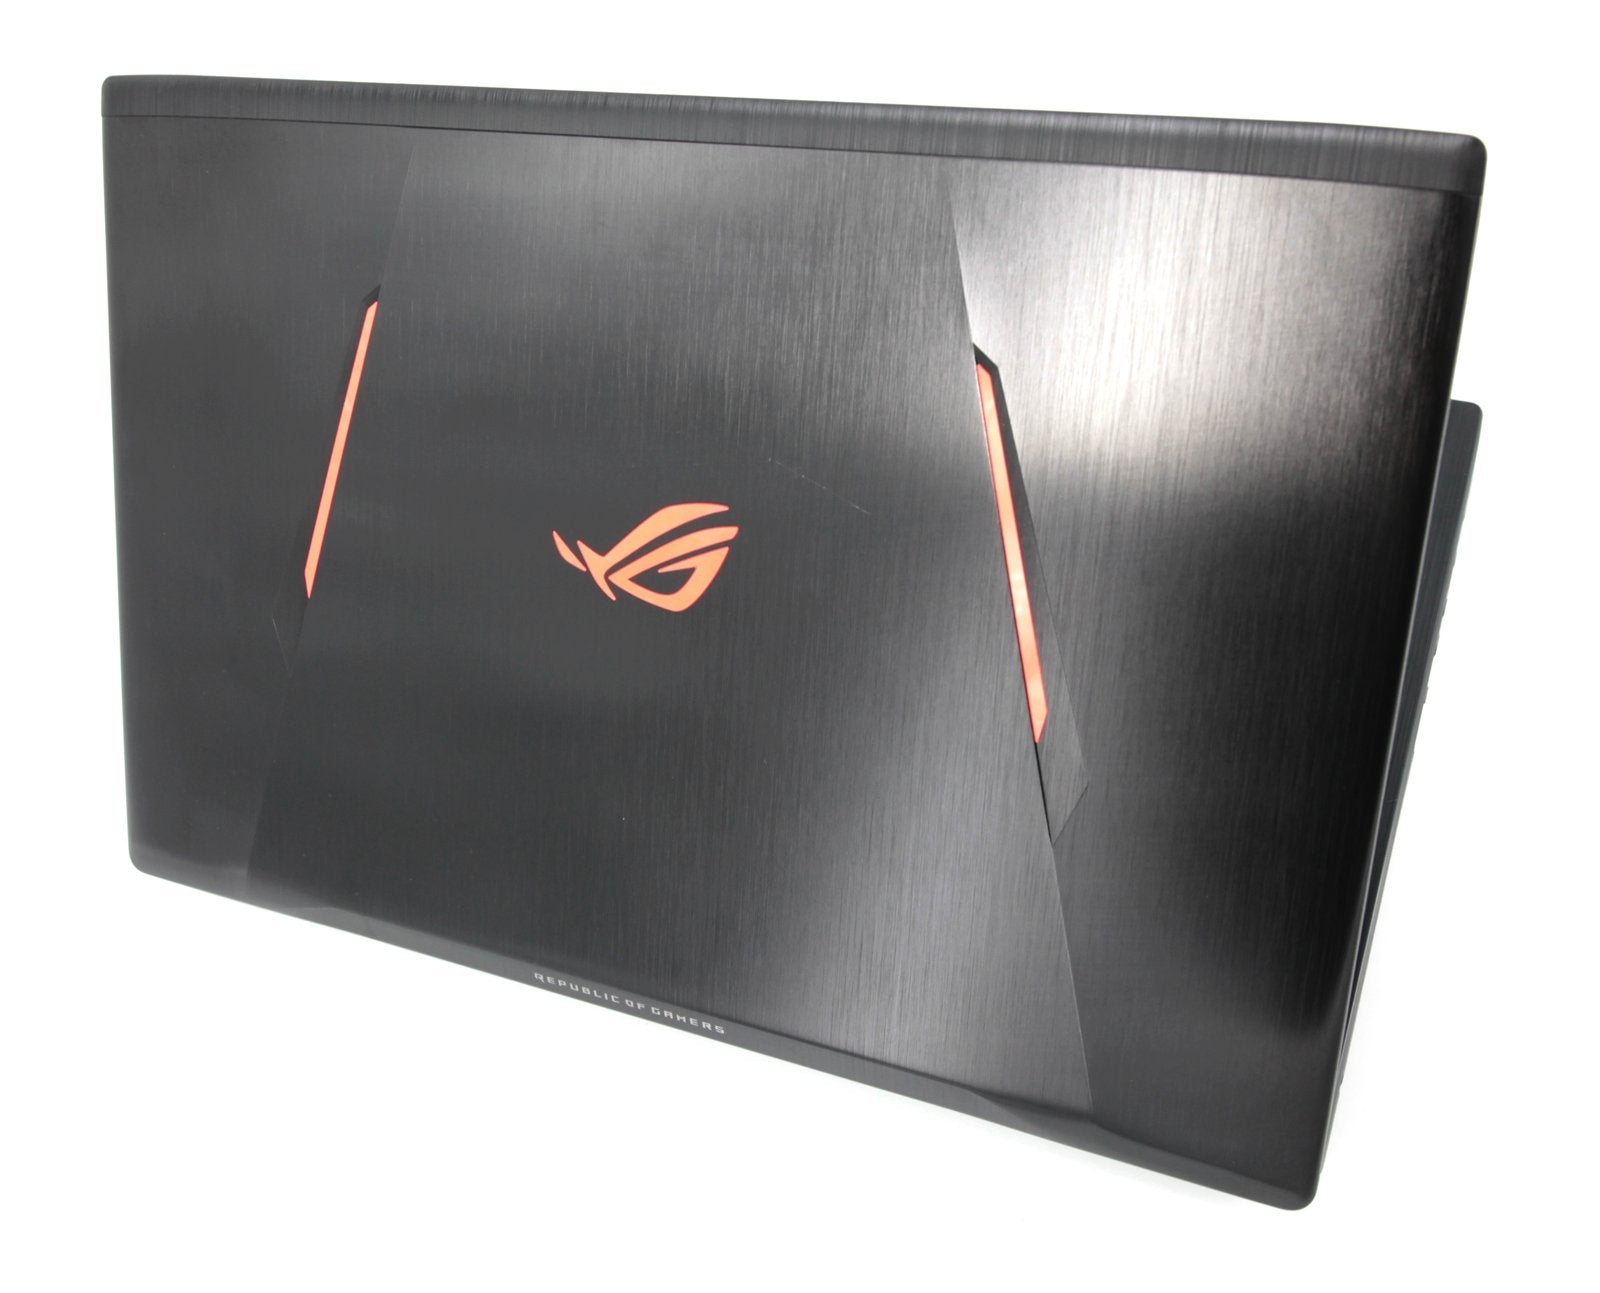 ASUS Strix GL753VD 17.3" Gaming Laptop: i5-7300HQ, GTX 1050, 12GB RAM Warranty - CruiseTech